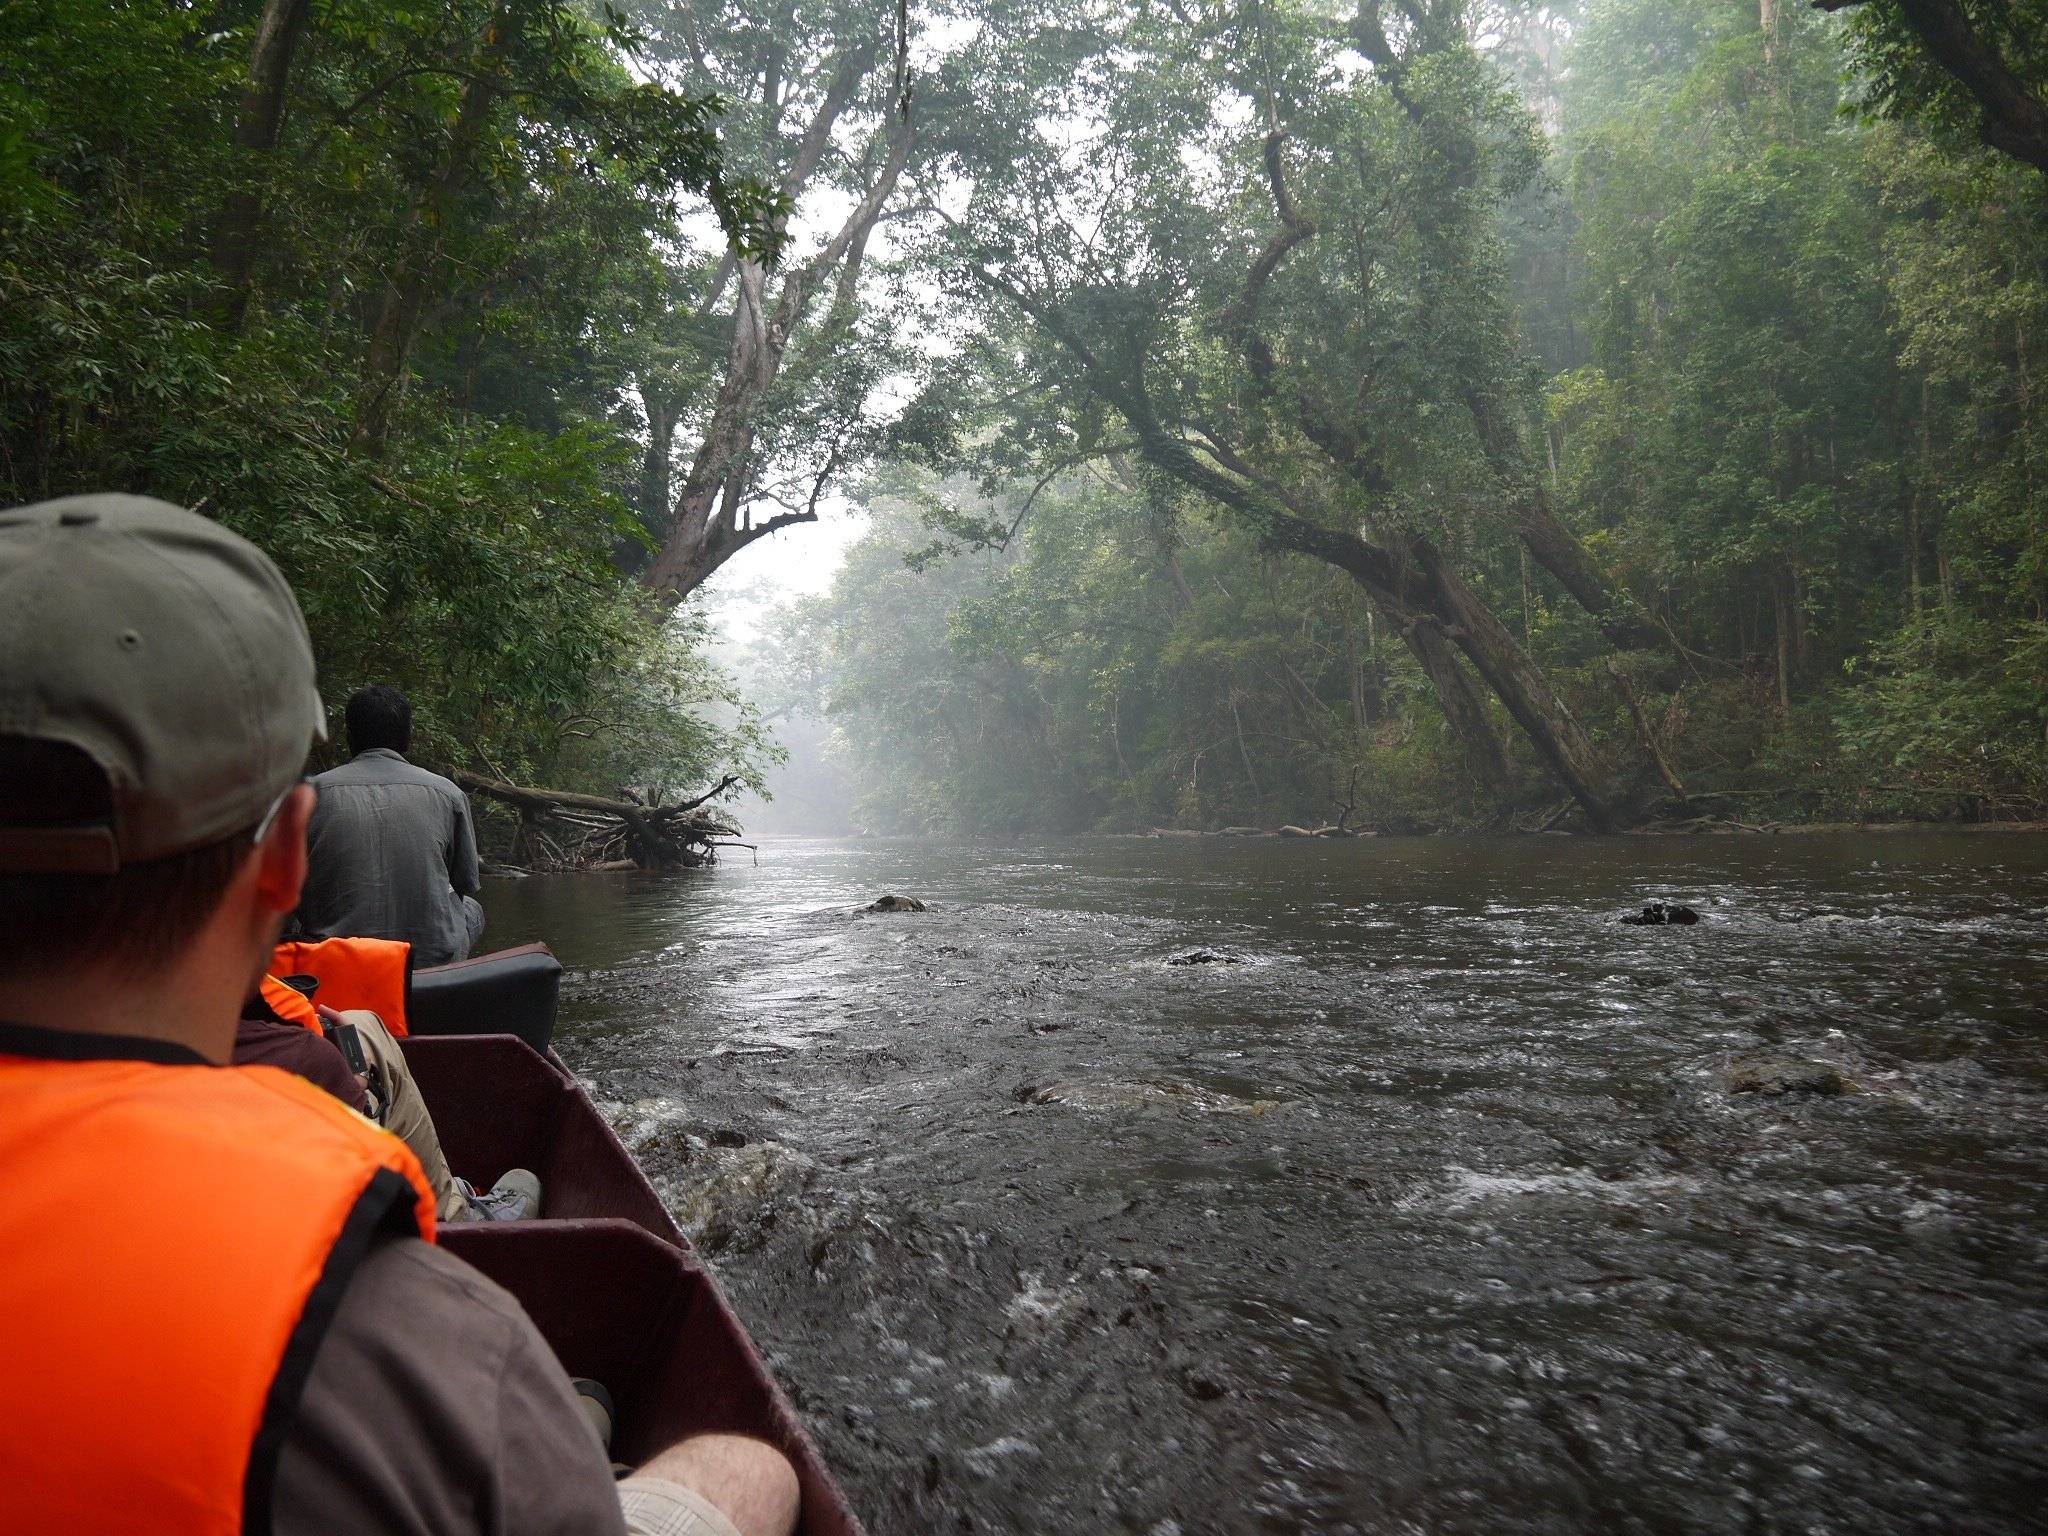 Trekking, ponti sospesi & navigazione del fiume in canoa